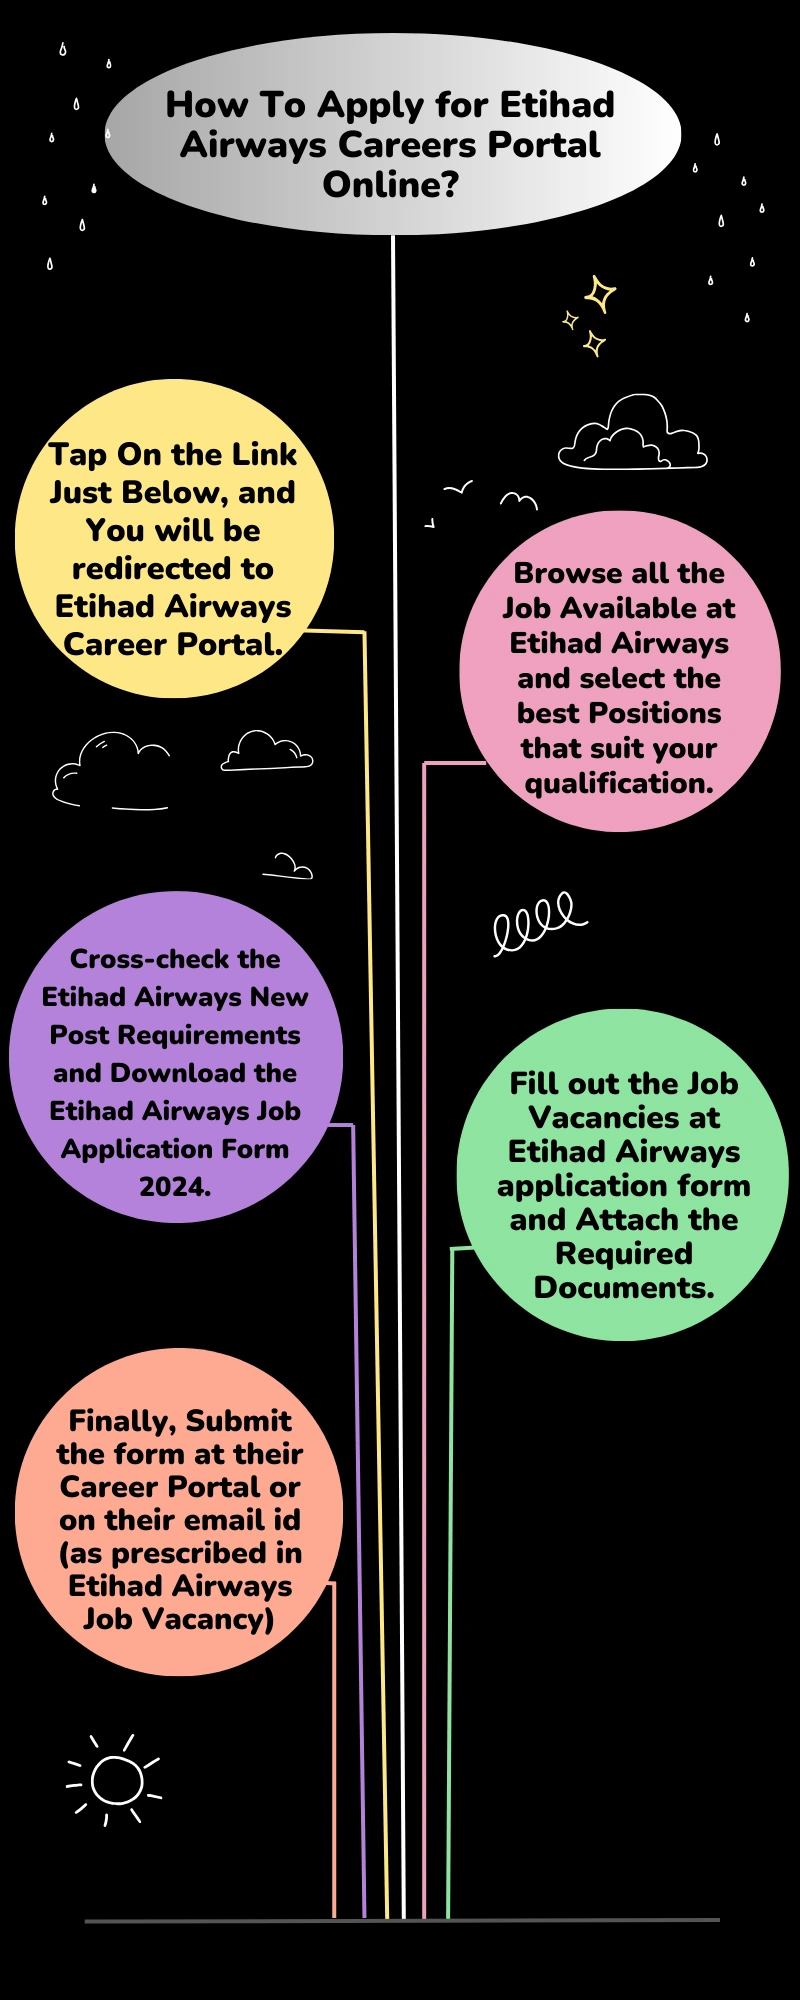 How To Apply for Etihad Airways Careers Portal Online?